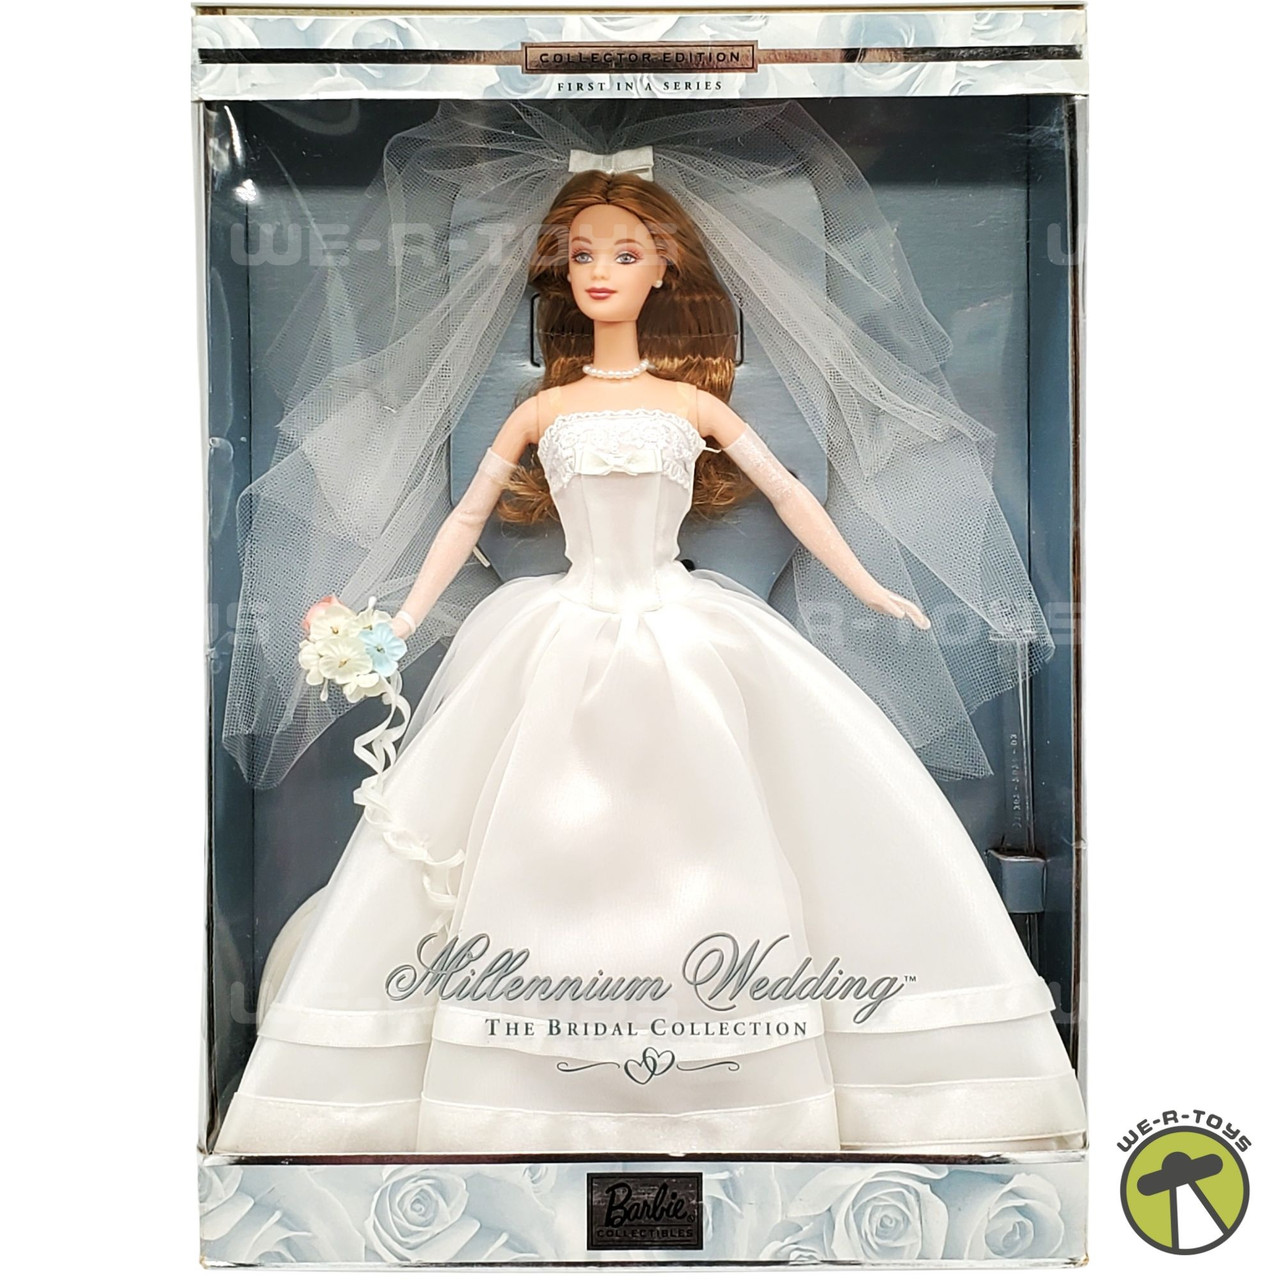 Millennium Wedding Barbie Doll The Bridal Collection 1999 Mattel 27674 -  We-R-Toys